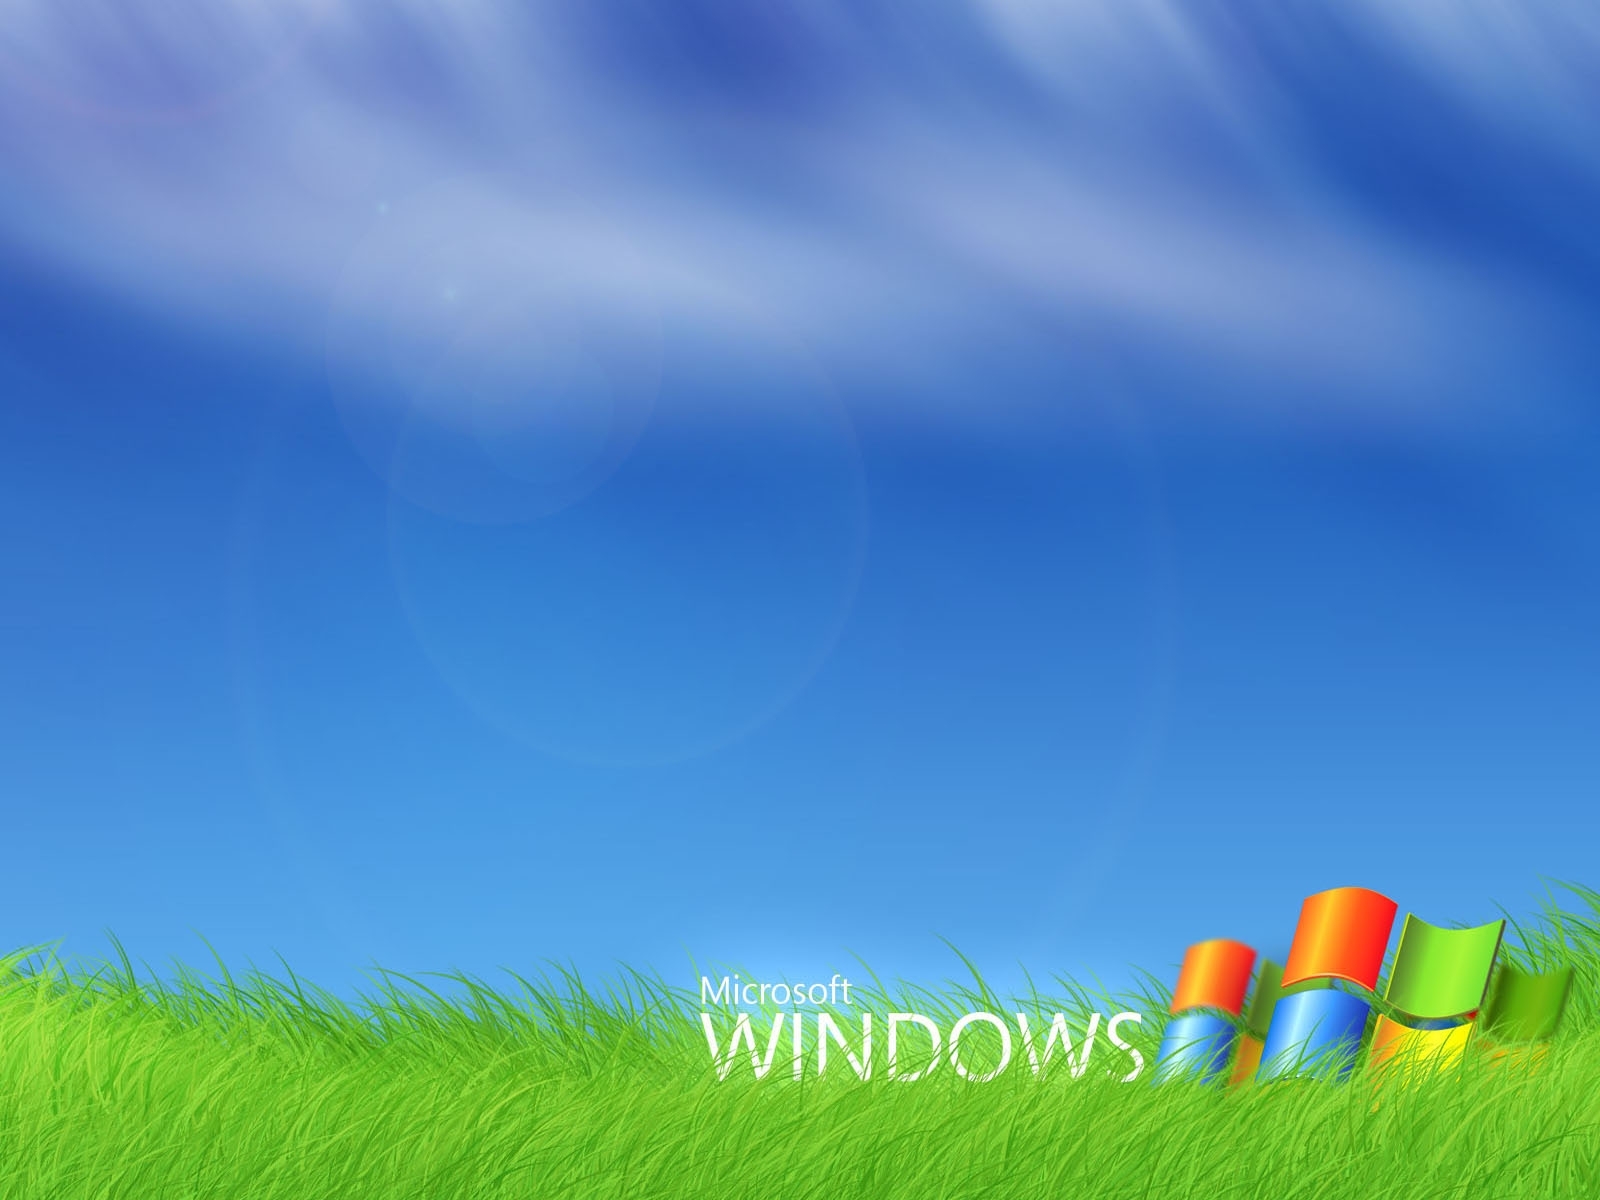 windows, logos, brands, background, blue